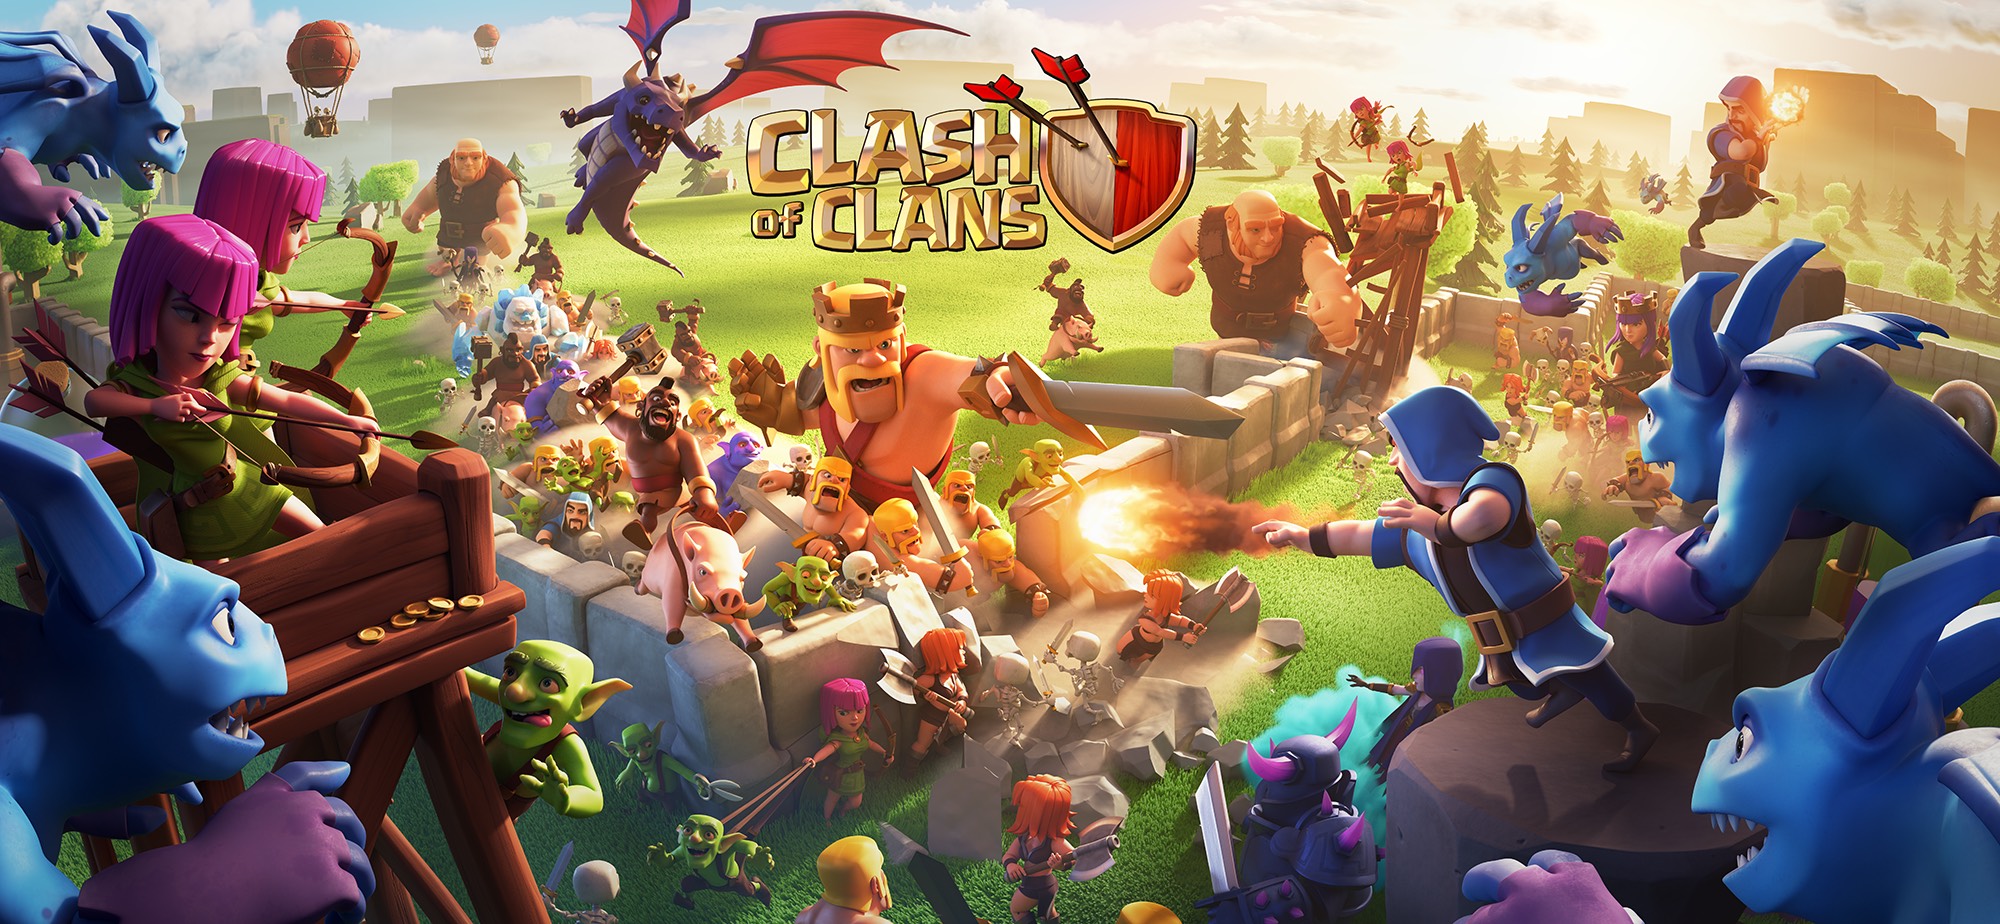 Clash of Clans HD Wallpaper full HD 2020